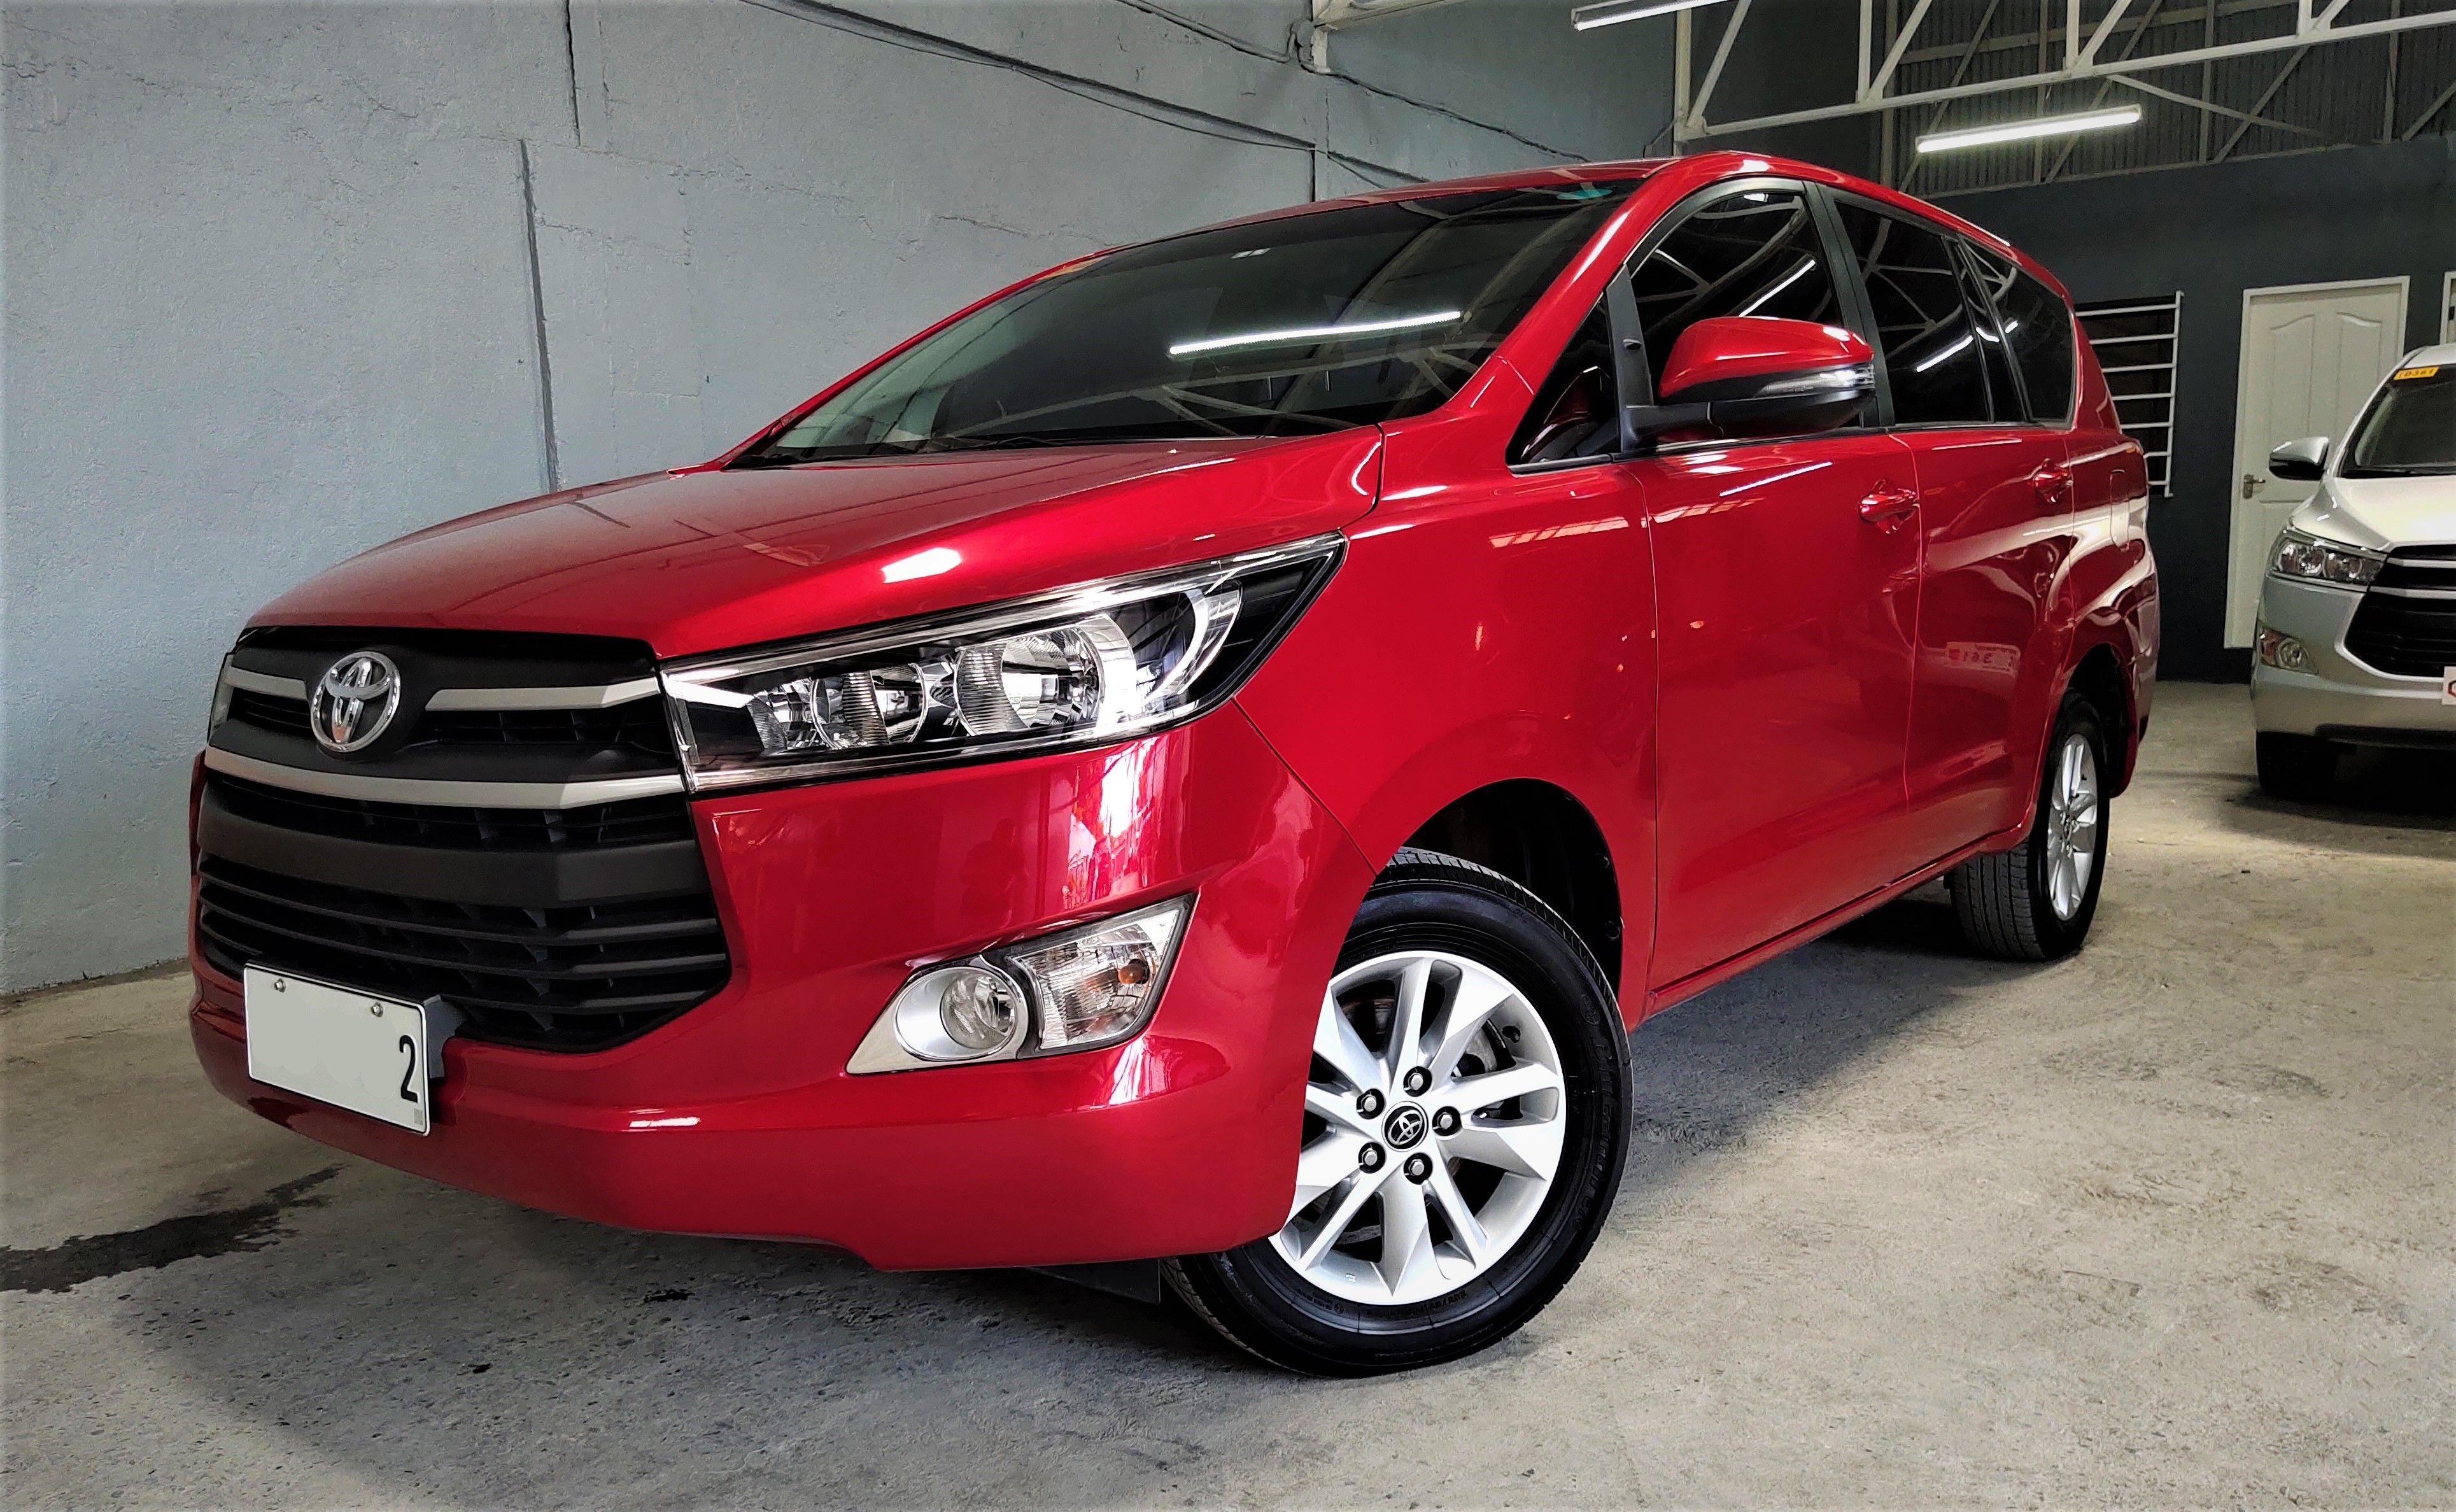 Toyota Innova 2018 Price Philippines - Used Innova for Sale